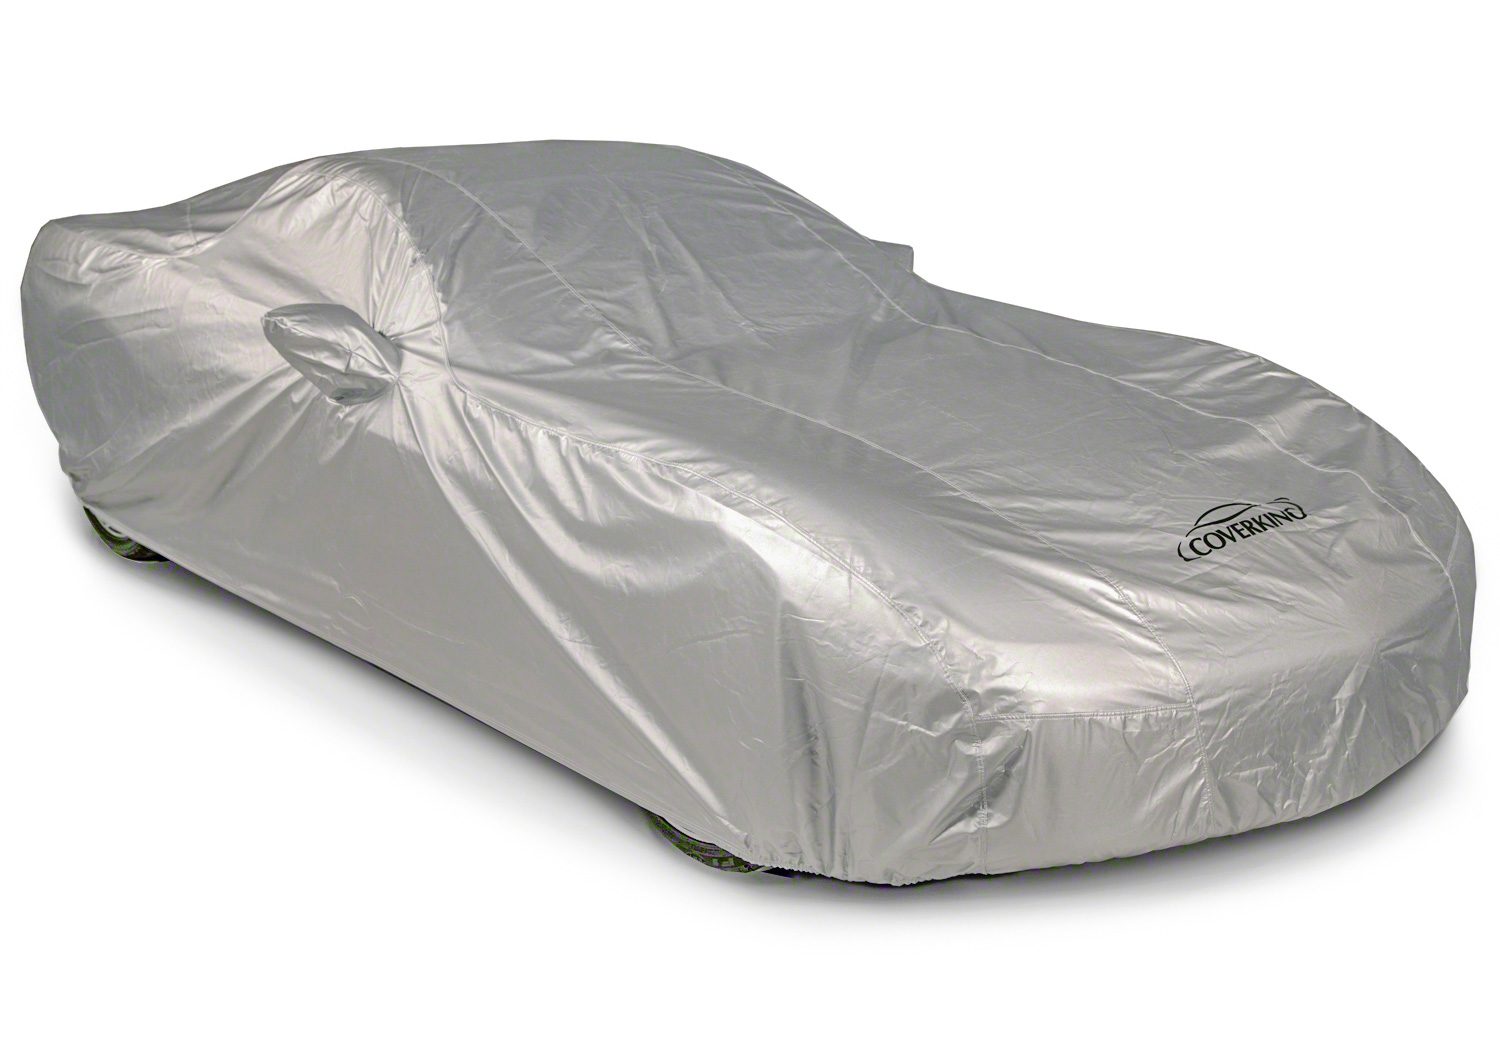 Silverguard Plus Car Cover for 2022 Ram 3500 